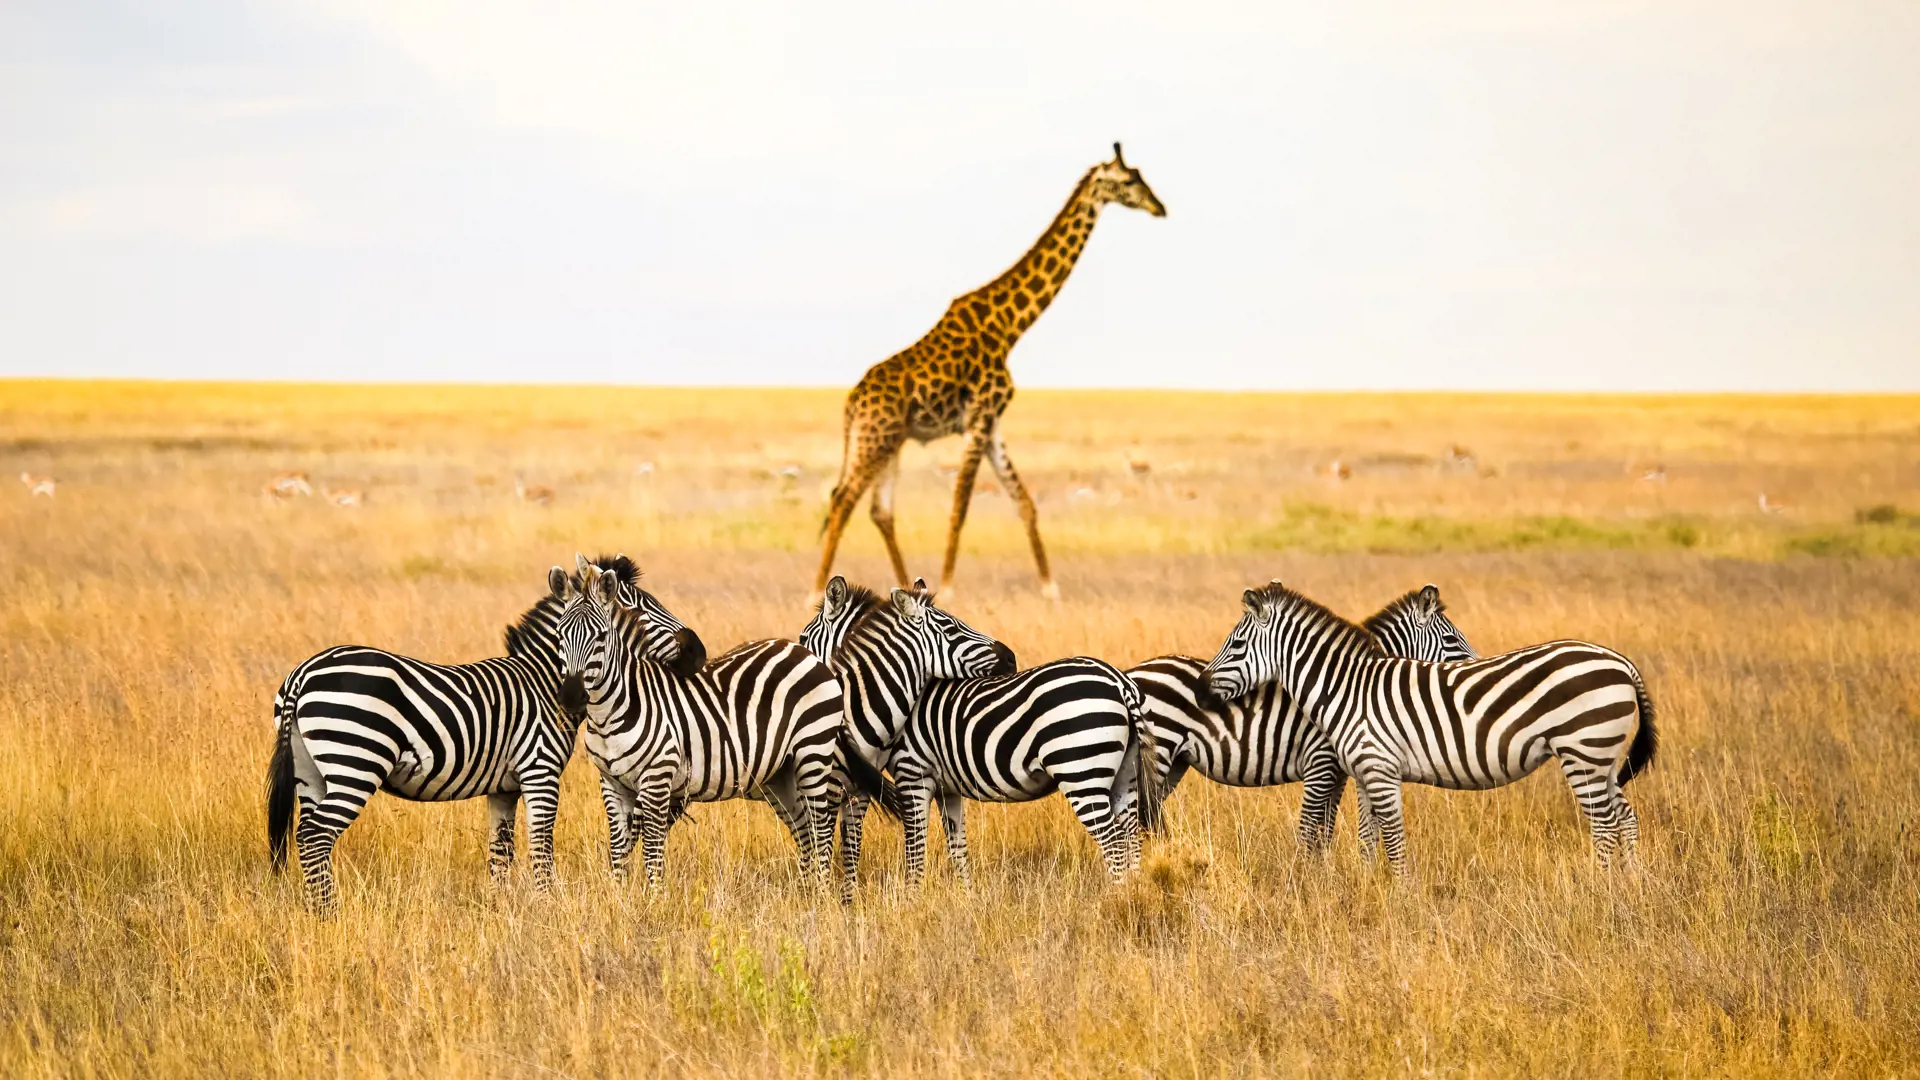 shutterstock_762734845 Zebras and a giraffe all together in Serengeti National Park, Tanzania.jpg